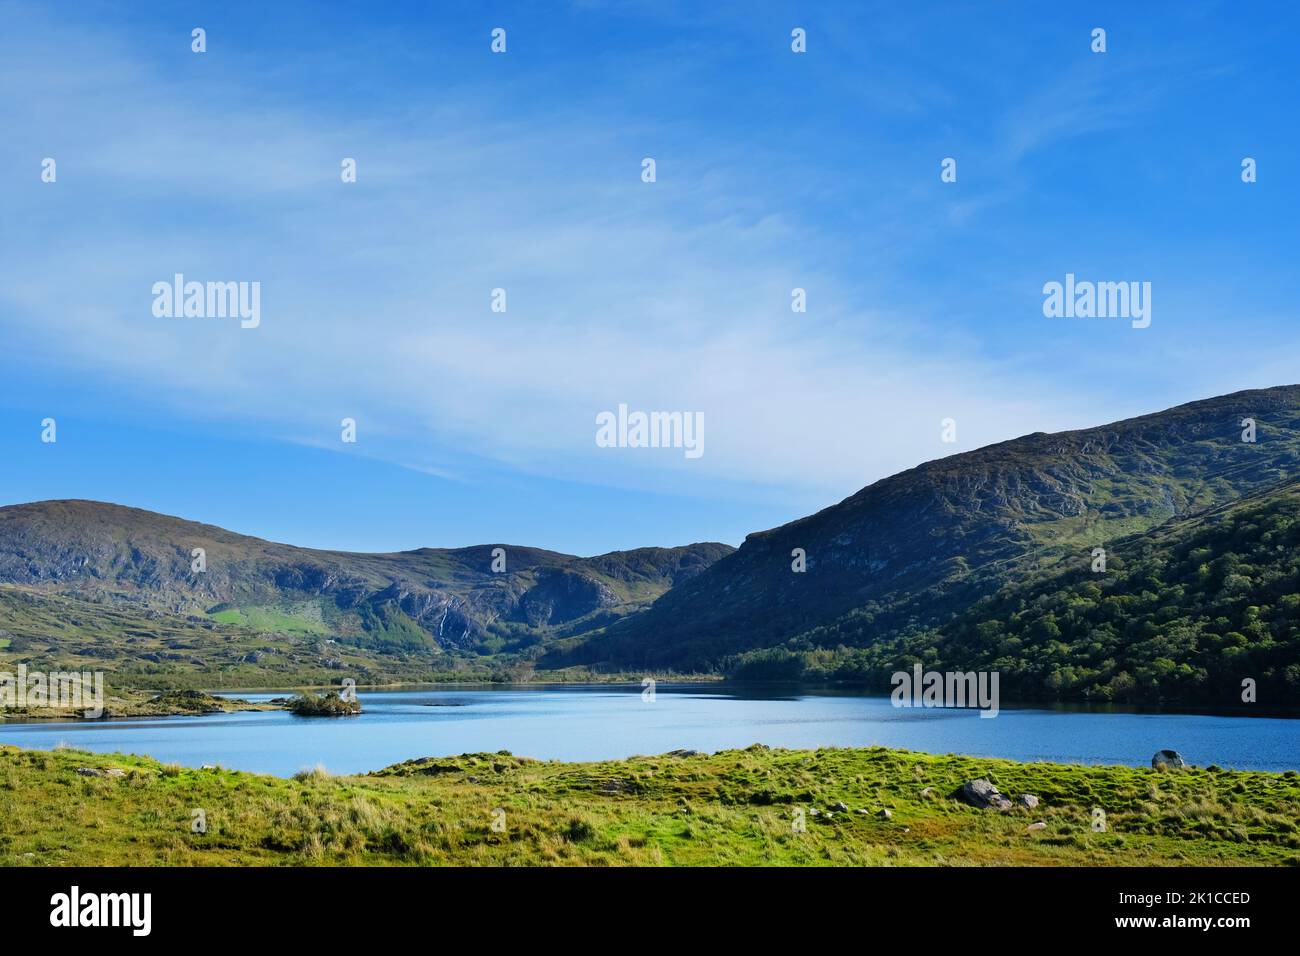 The landscape at Gleninchaquin Park, County Kerry, Ireland - John Gollop Stock Photo